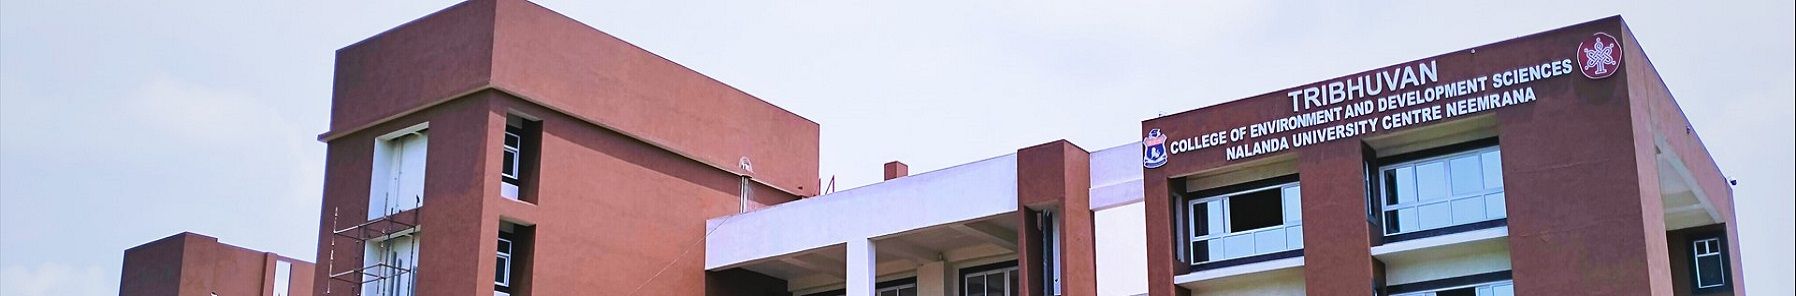 Tribhuvan College of Environment and Development Sciences Campus Building(1)